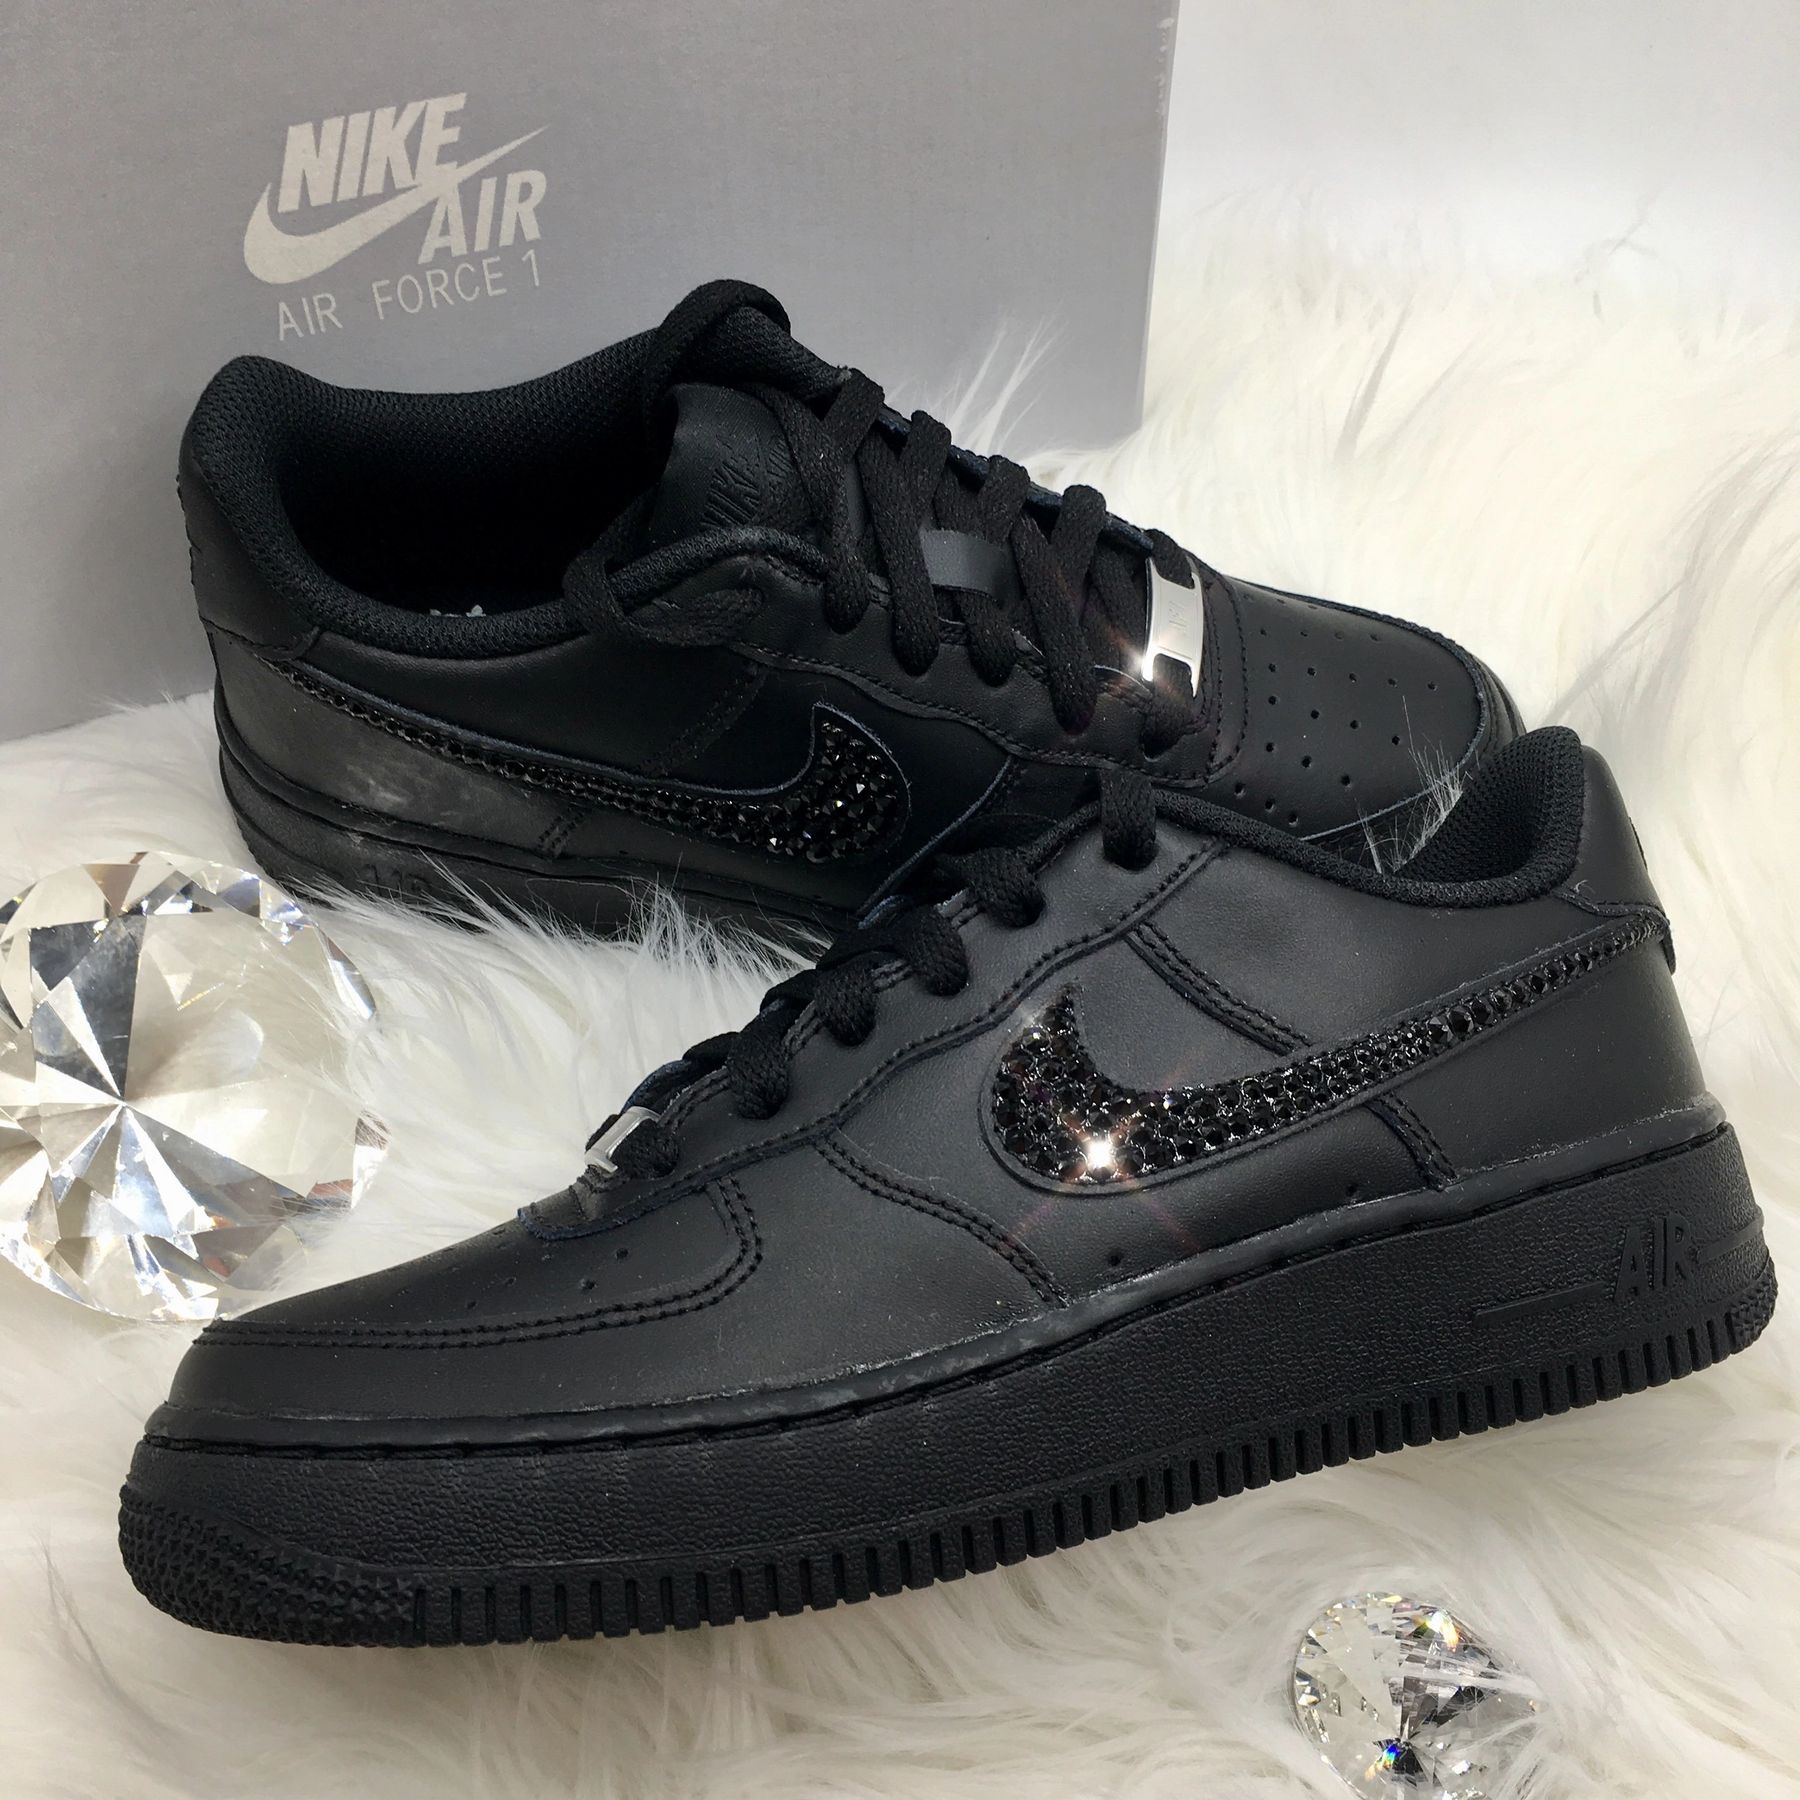 Swarovski Bling Nike Air Force 1 Shoes - Low - Black with Black Rhinestones